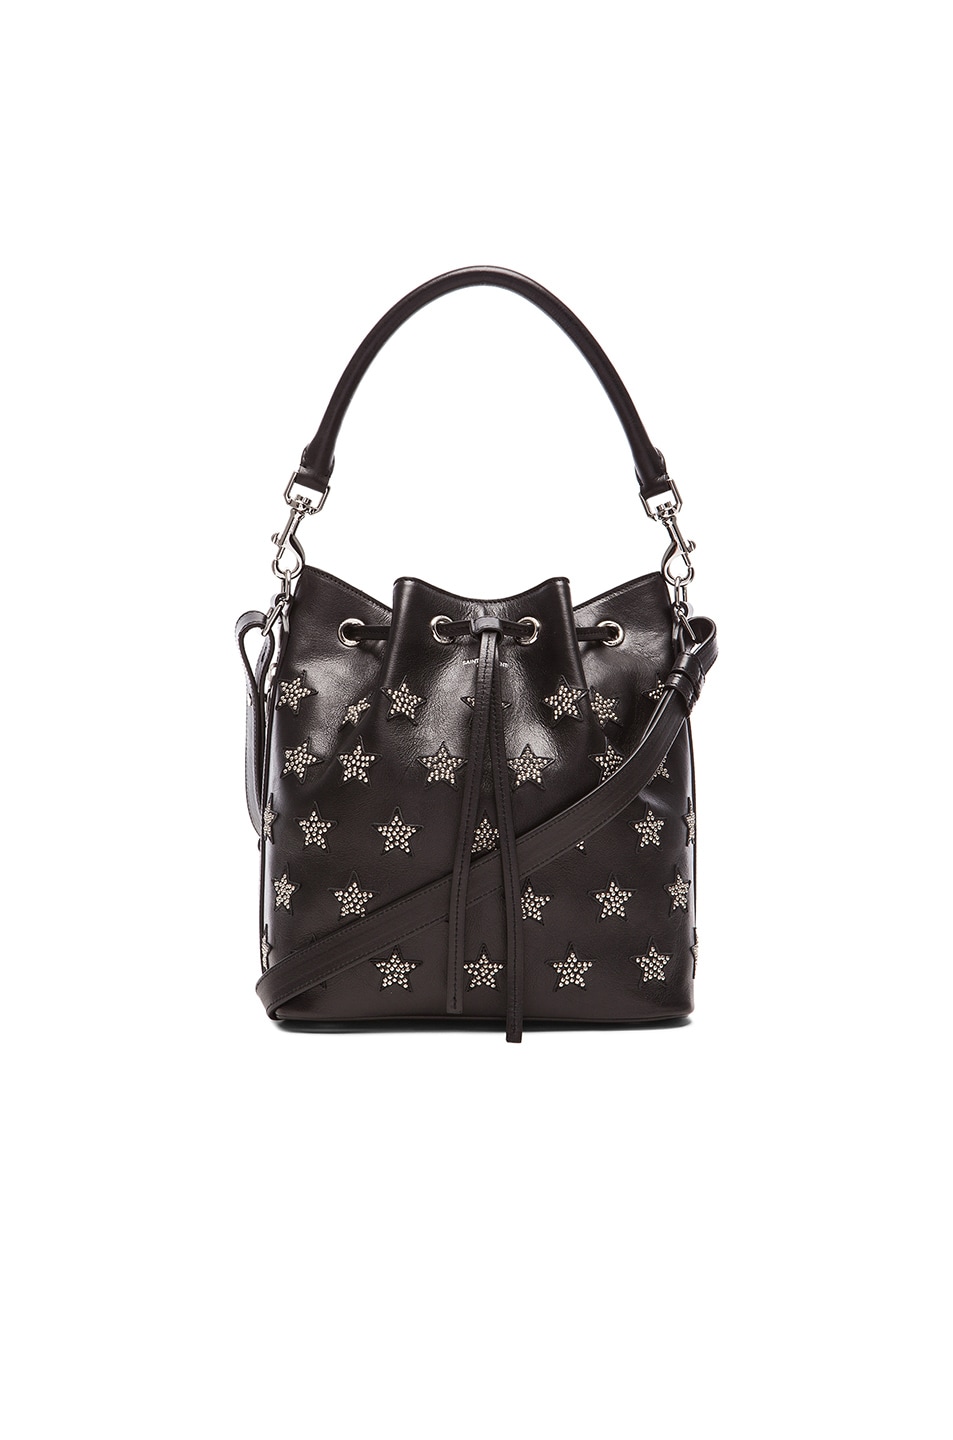 ysl wallet online - Saint Laurent Medium Star Studs Emmanuelle Bucket Bag in Black | FWRD